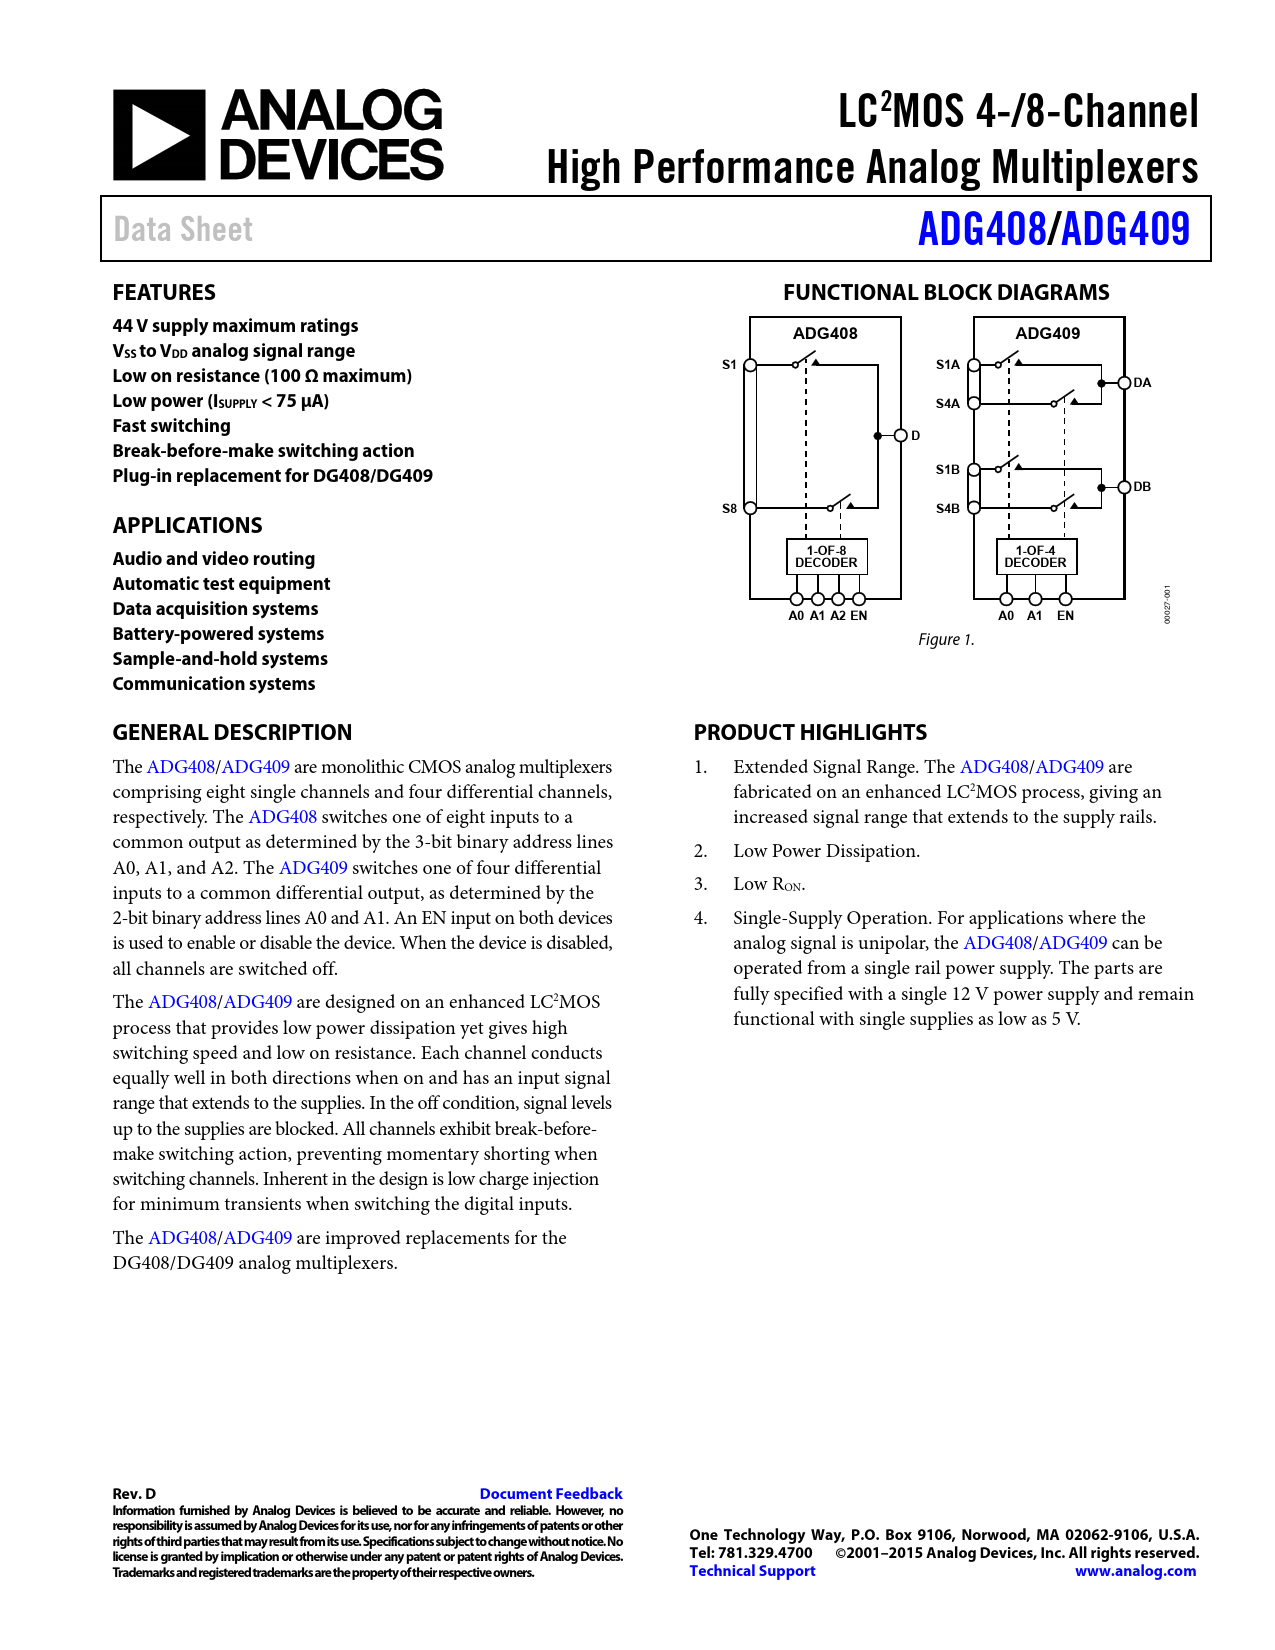 Datasheet ADG408, ADG409 Analog Devices, Revision: D